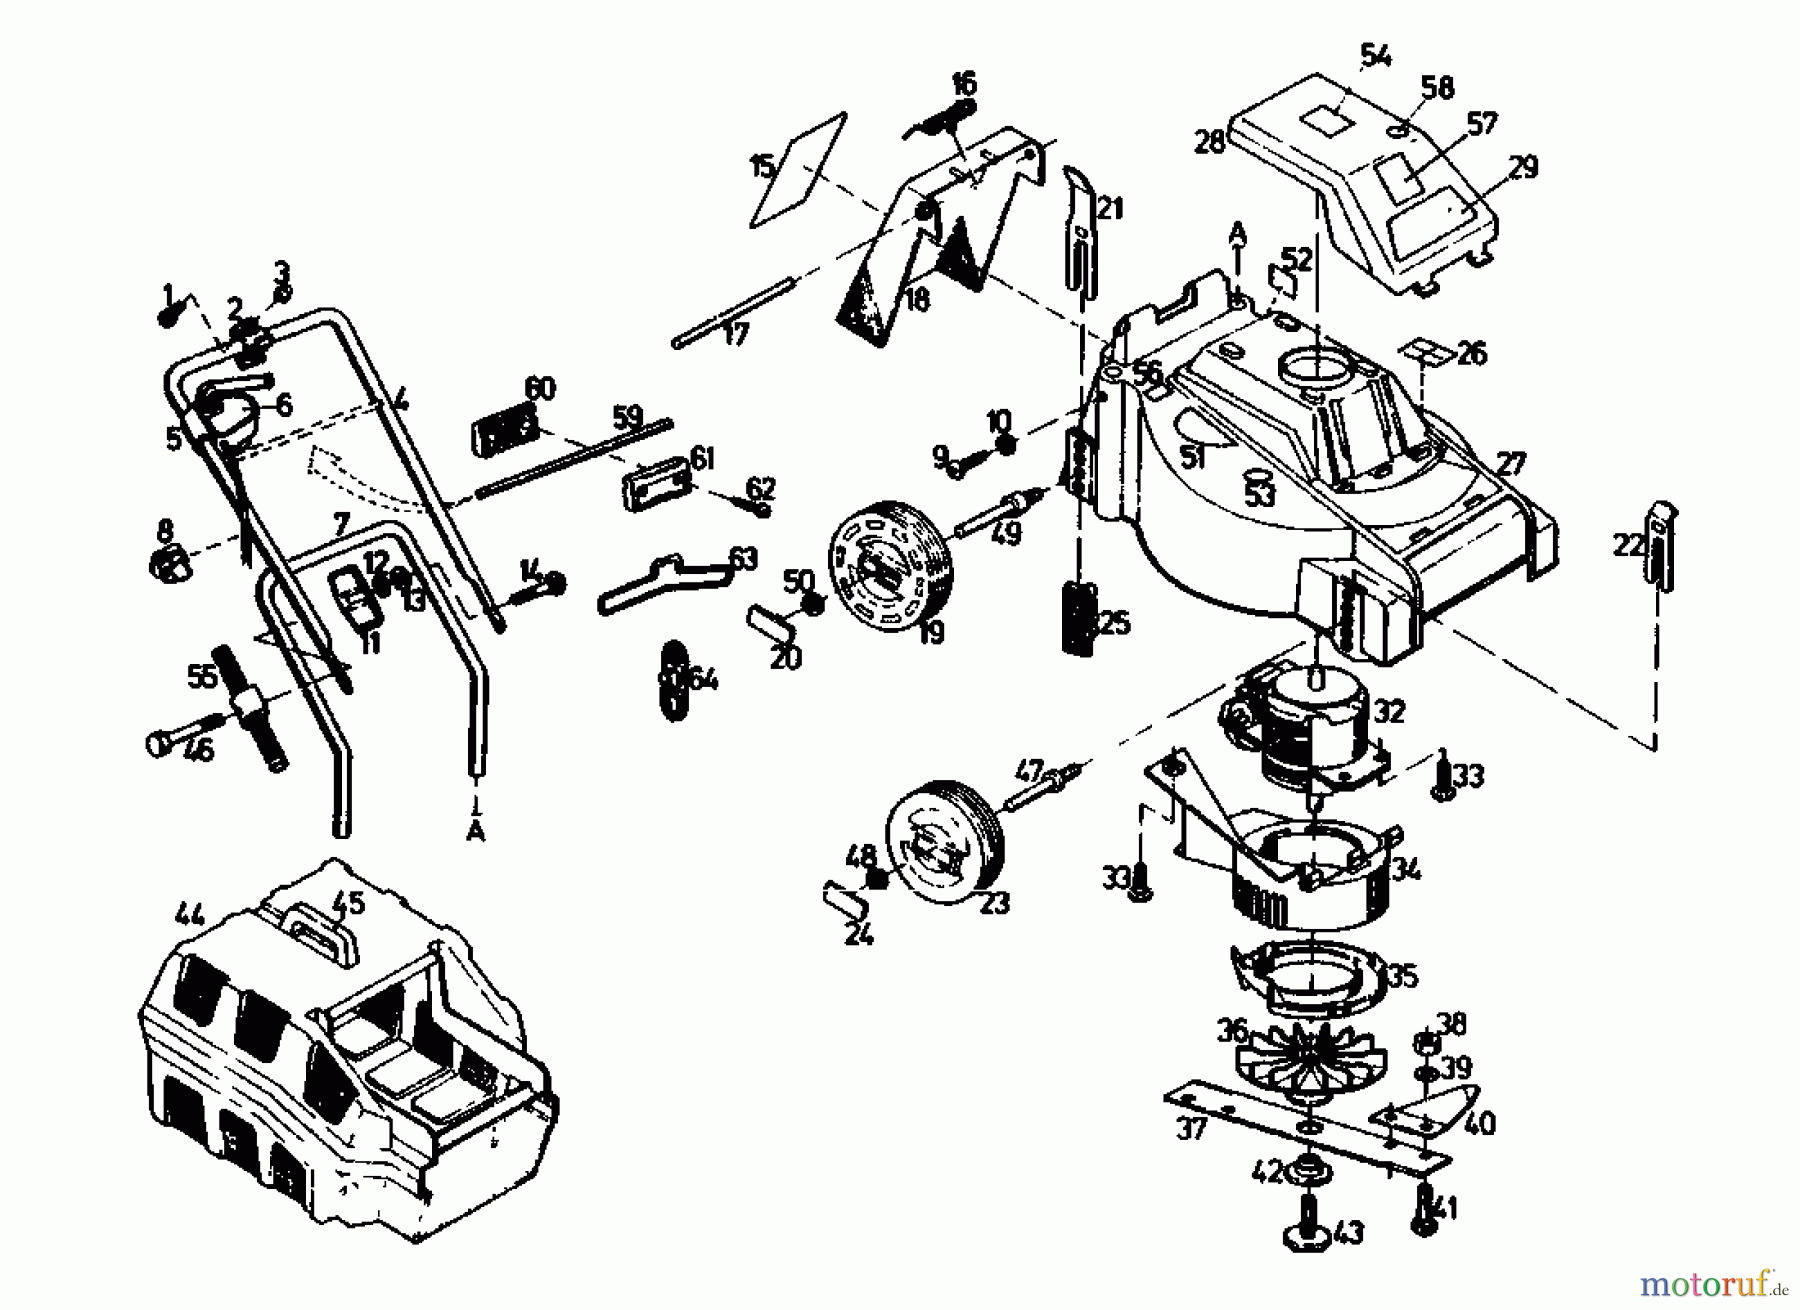  Gutbrod Electric mower HE 40 CH 02889.06  (1990) Basic machine